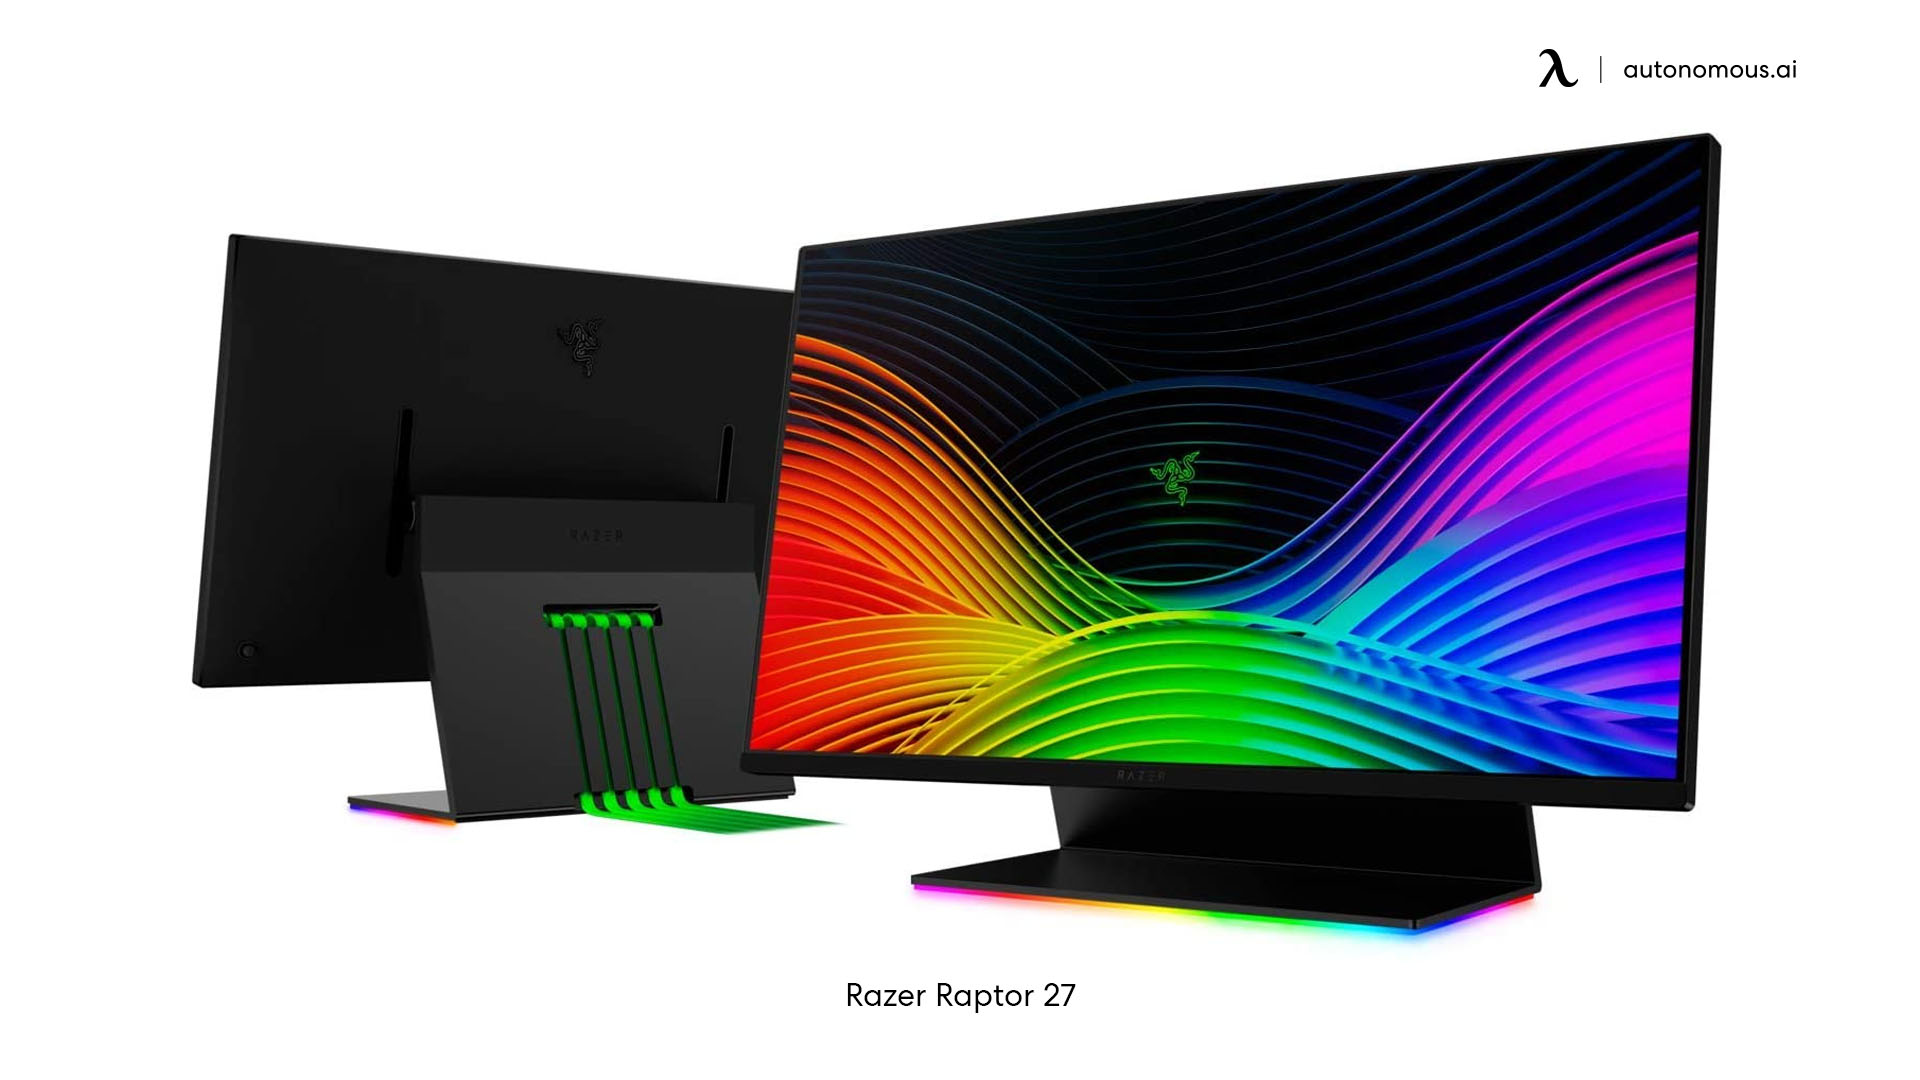 Razer Raptor 27 27-inch gaming monitor